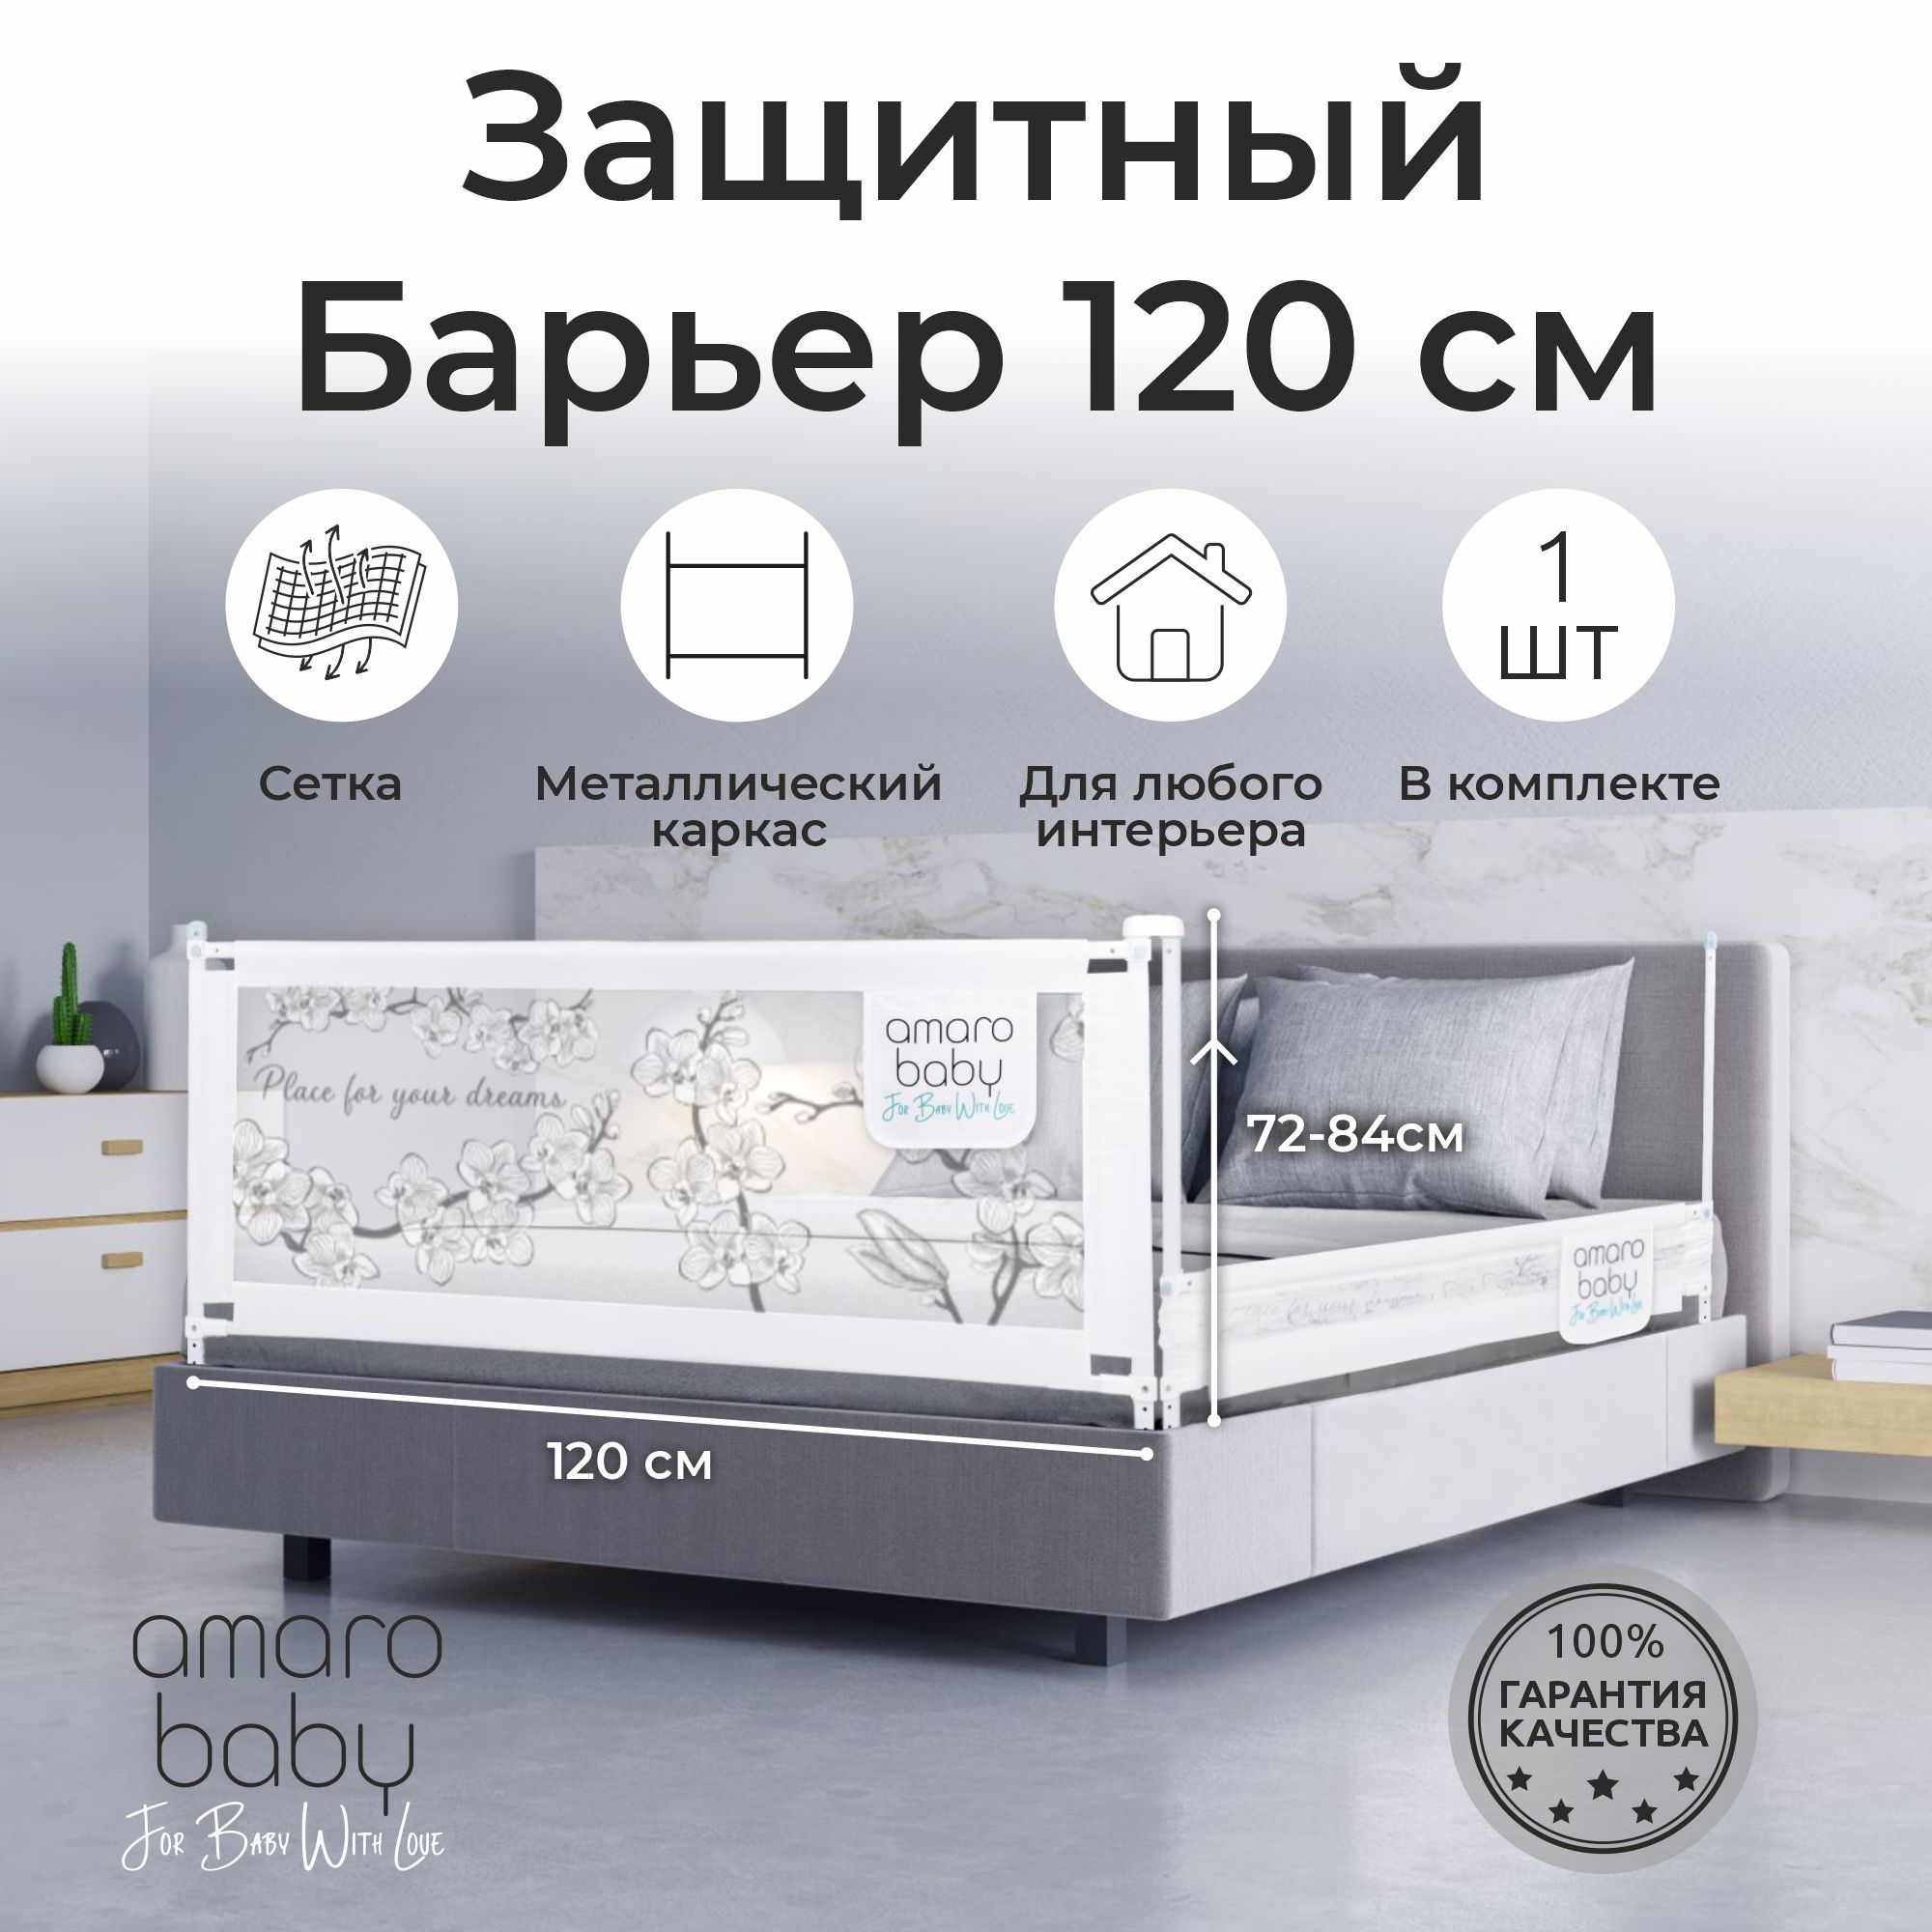 Барьер защитный для кровати Amarobaby safety of dreams, белый, 120 см AB SOFD BSR BEL 120